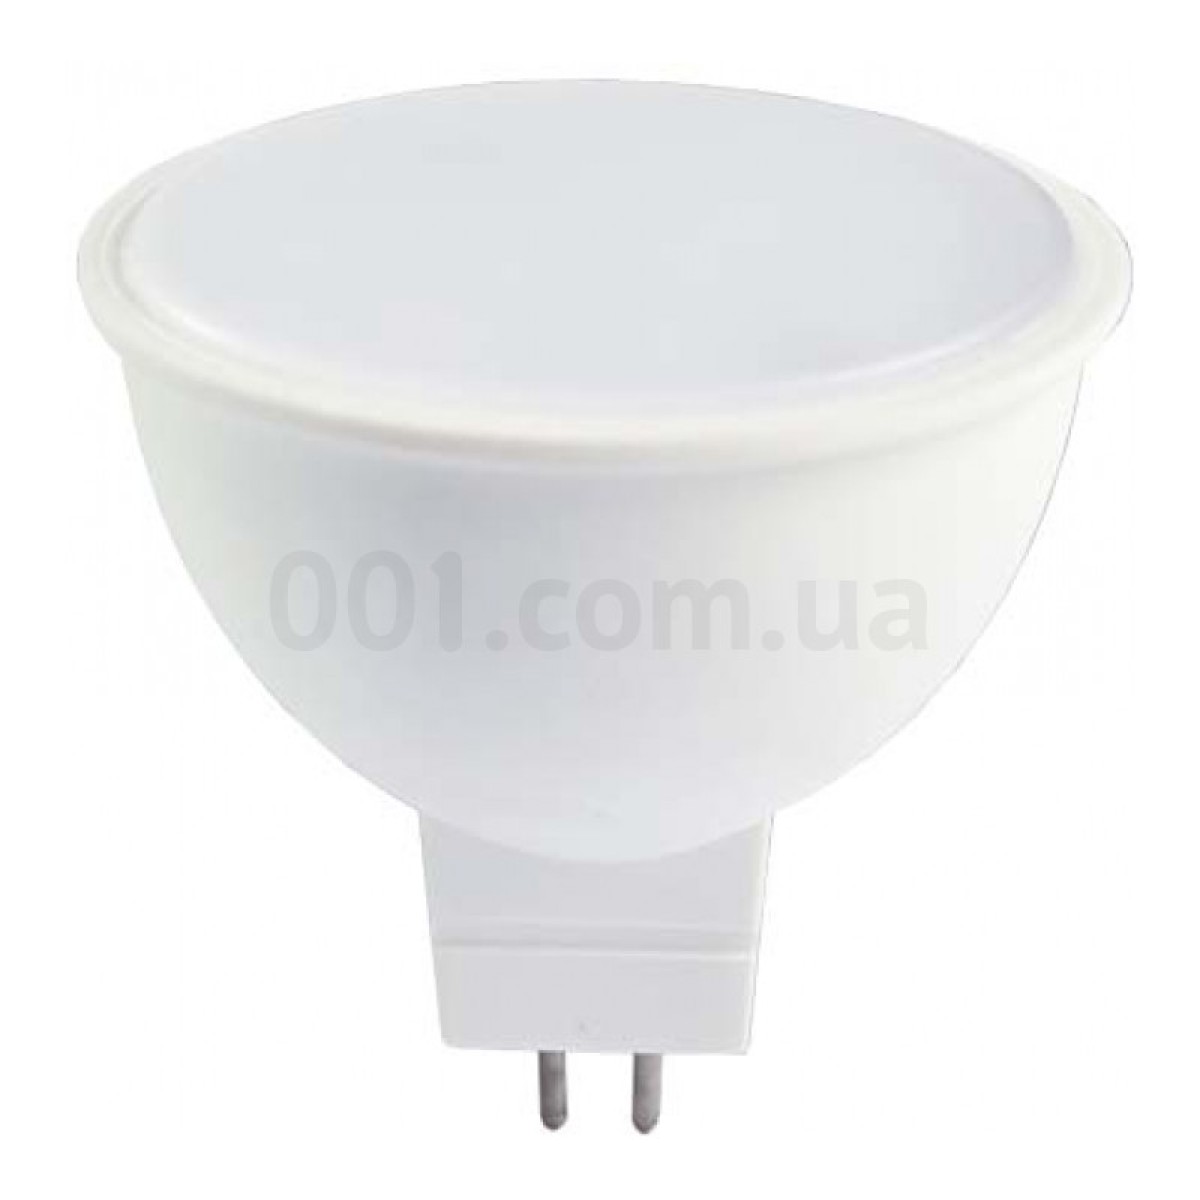 Светодиодная лампа LB-240 MR16 4Вт 6400K G5.3, Feron 256_256.jpg